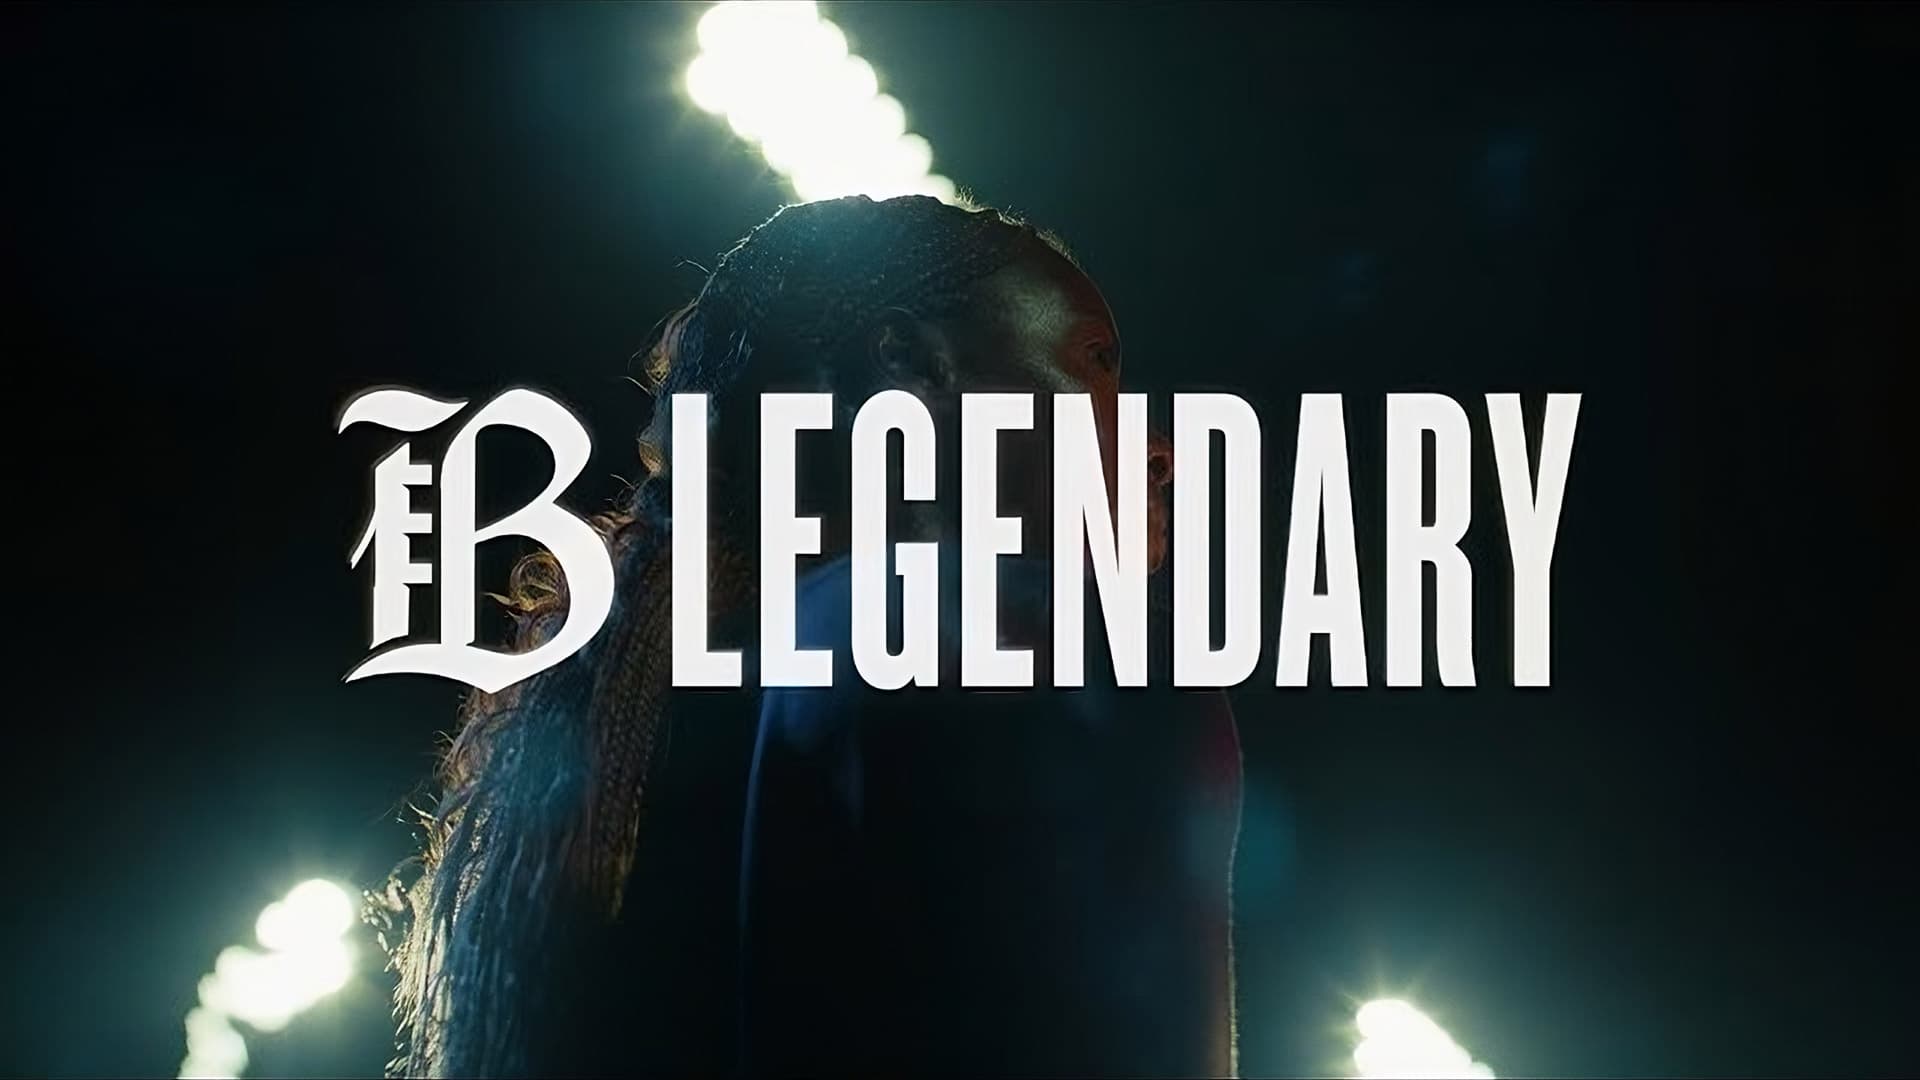 Bay FC - Be Legendary